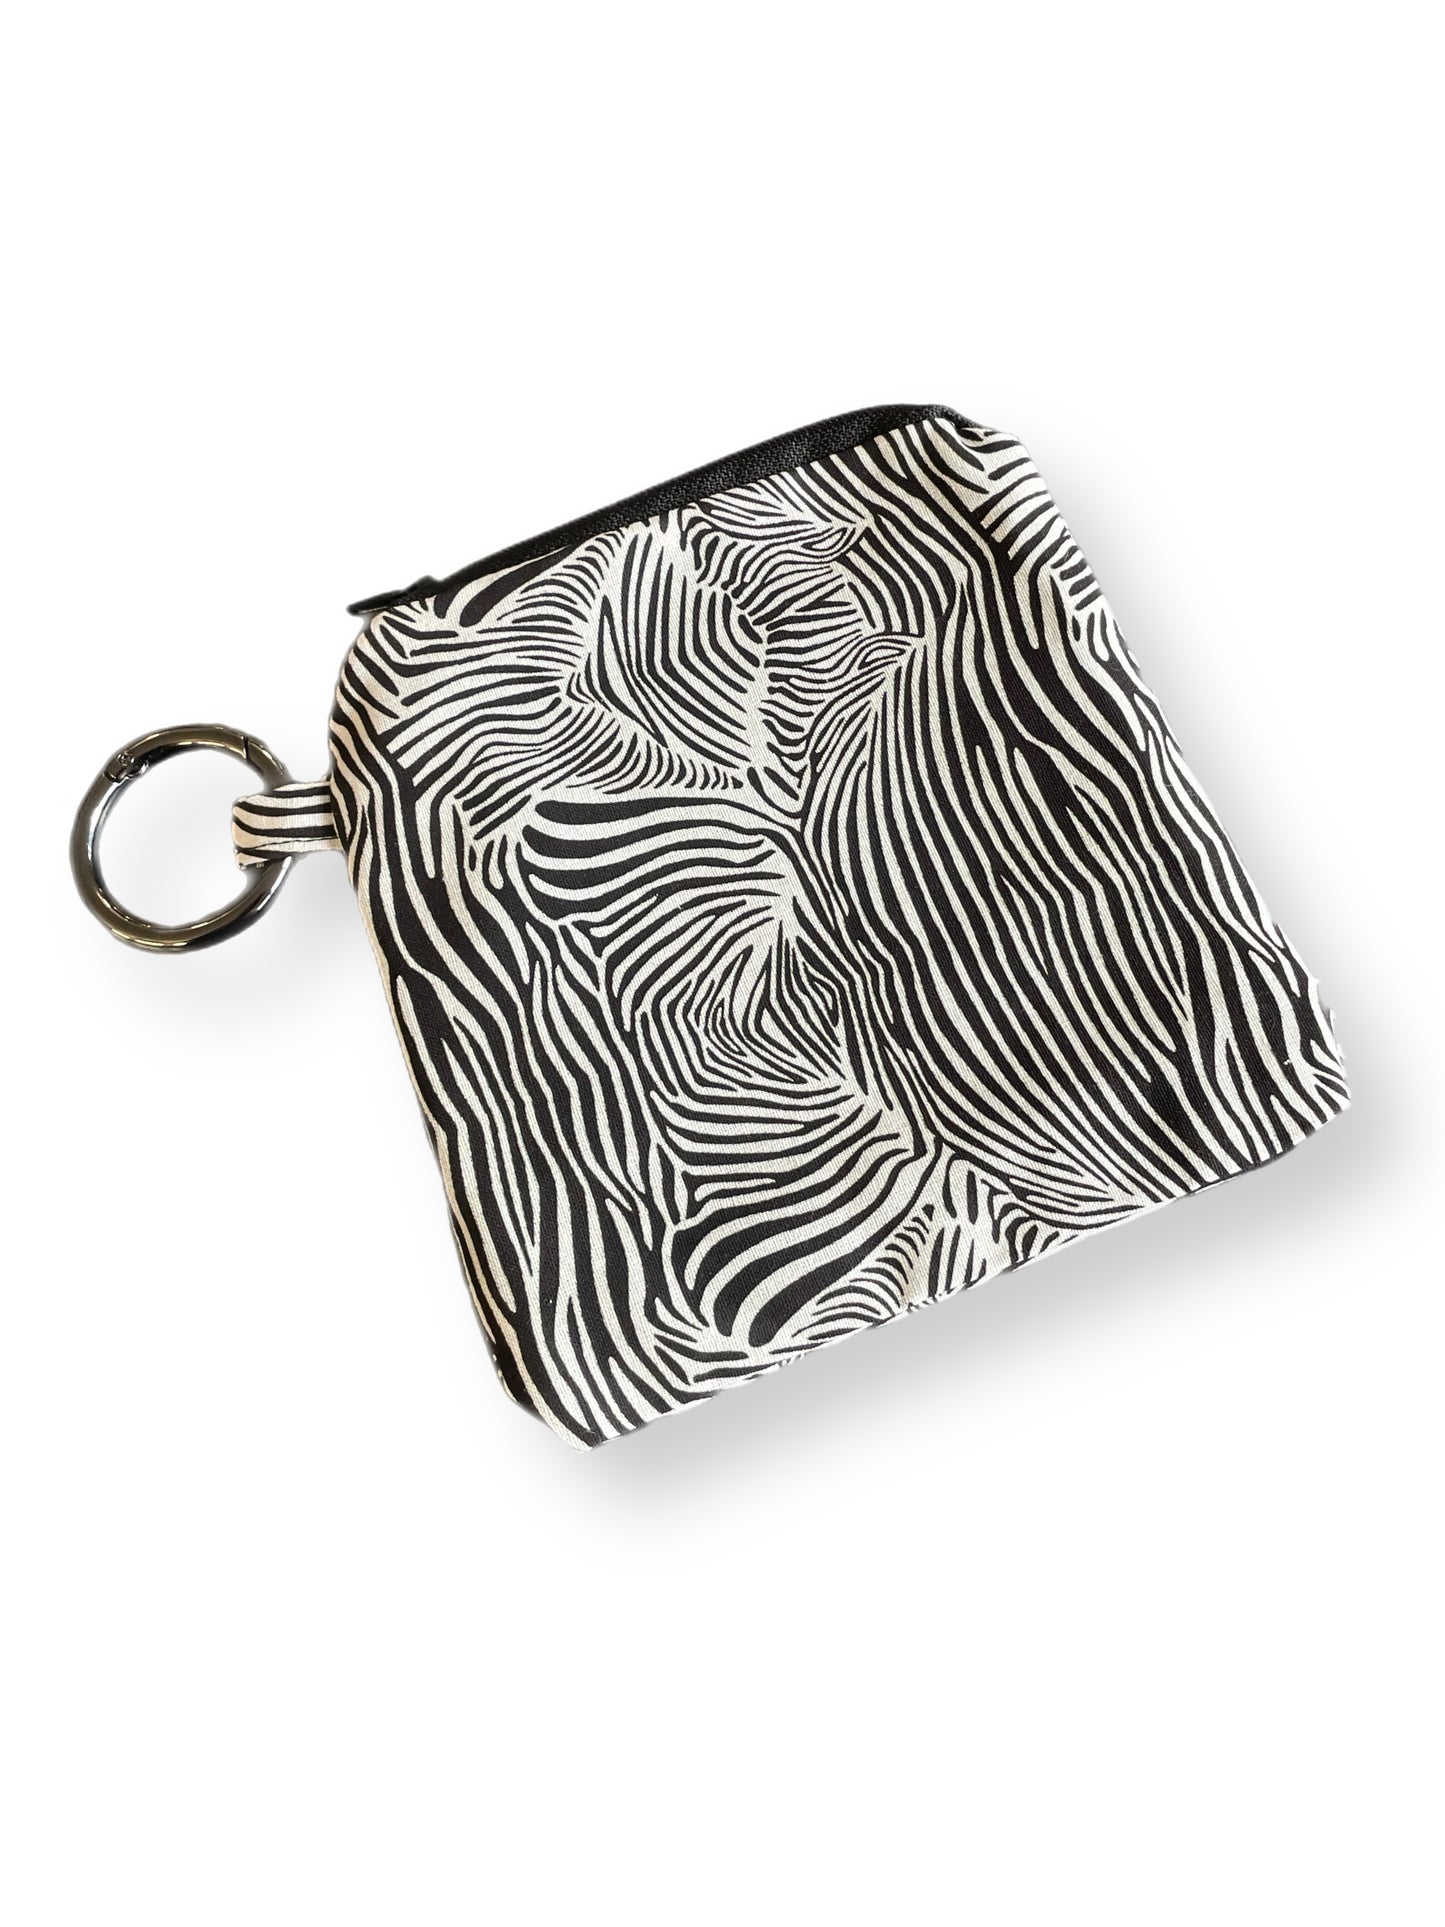 Zebra print b&w greyhound wide Martingale collar cotton covered super soft